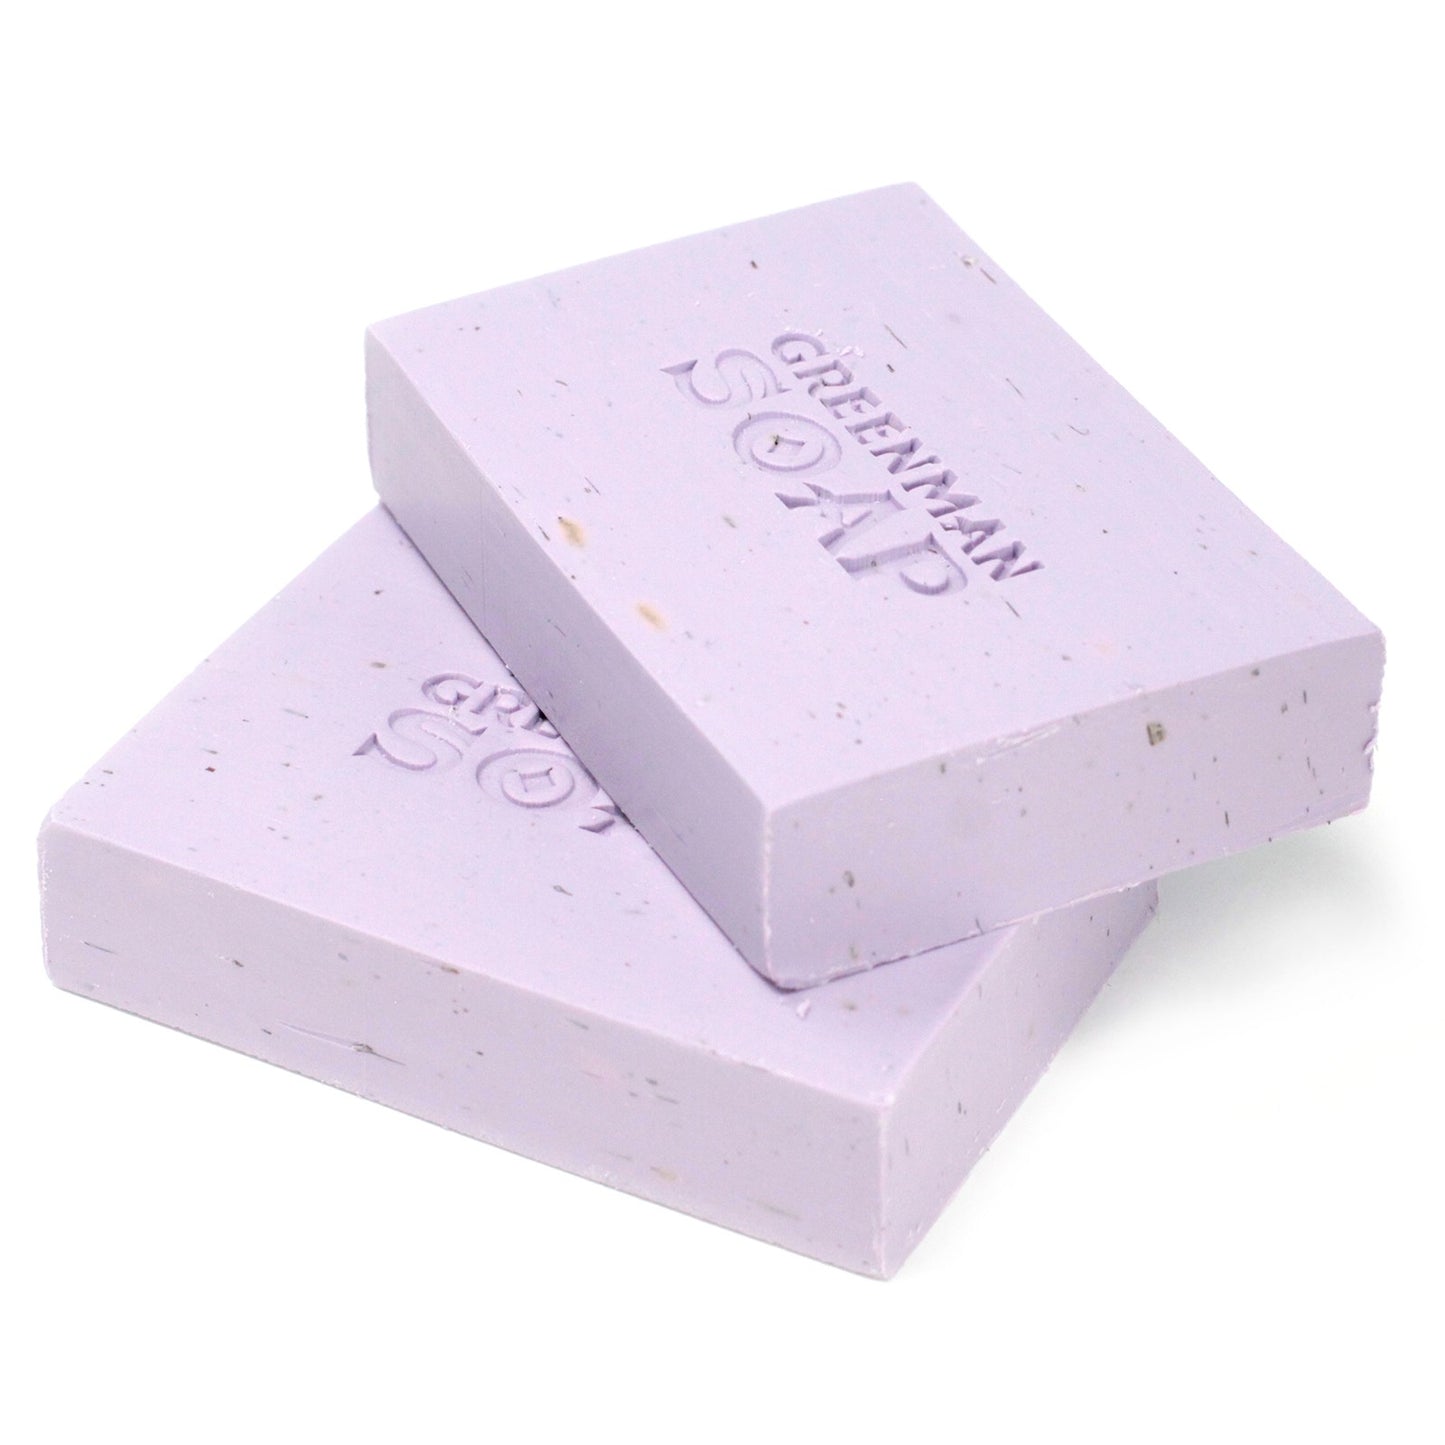 Greenman Soap Slice 100g - Night Time - Lavender & Geranium